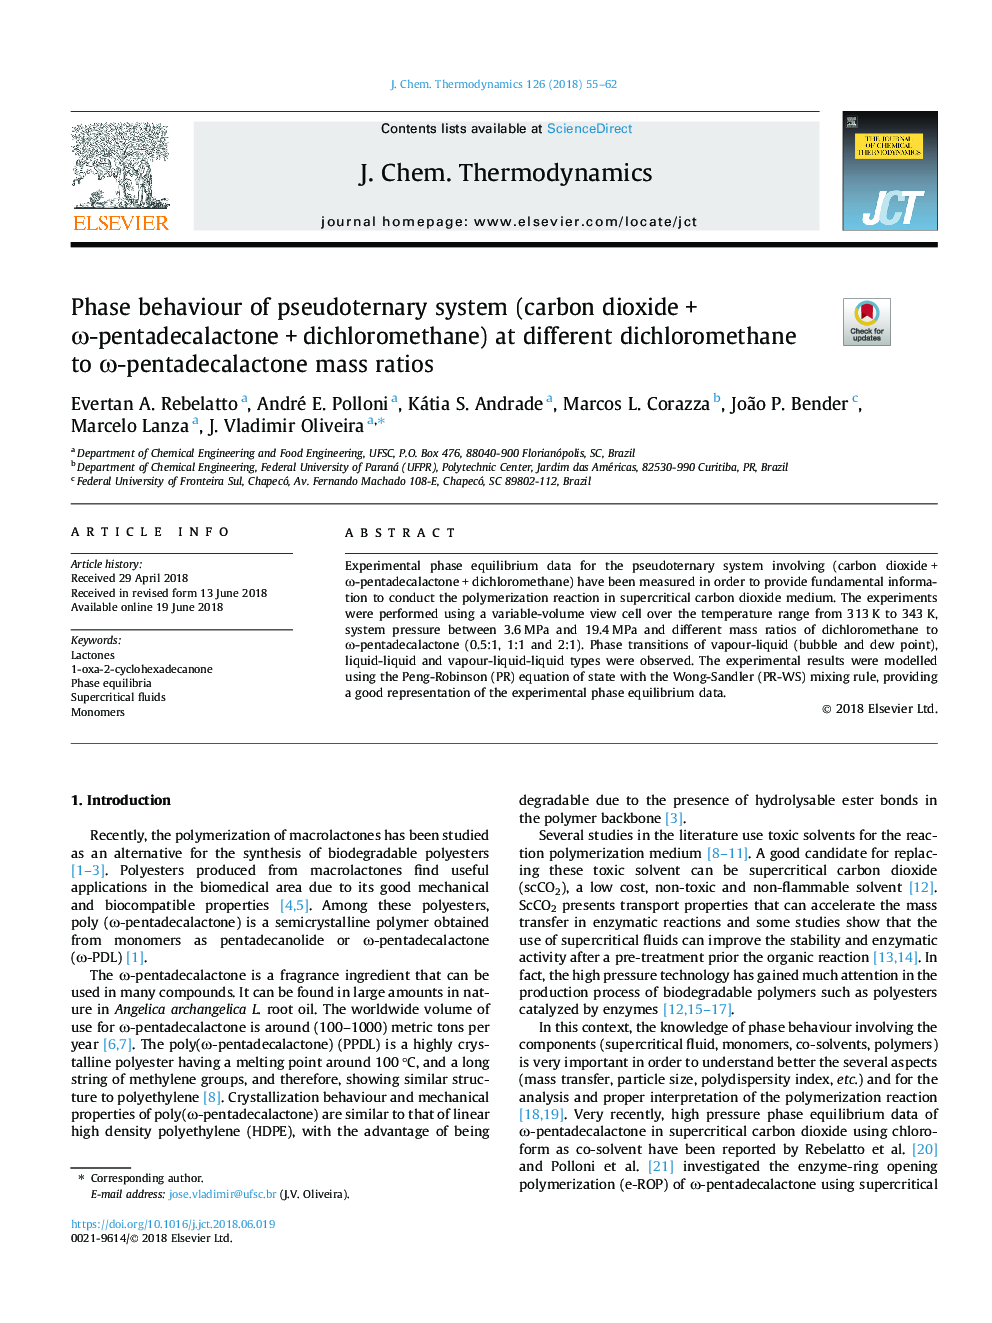 Phase behaviour of pseudoternary system (carbon dioxideâ¯+â¯Ï-pentadecalactoneâ¯+â¯dichloromethane) at different dichloromethane to Ï-pentadecalactone mass ratios